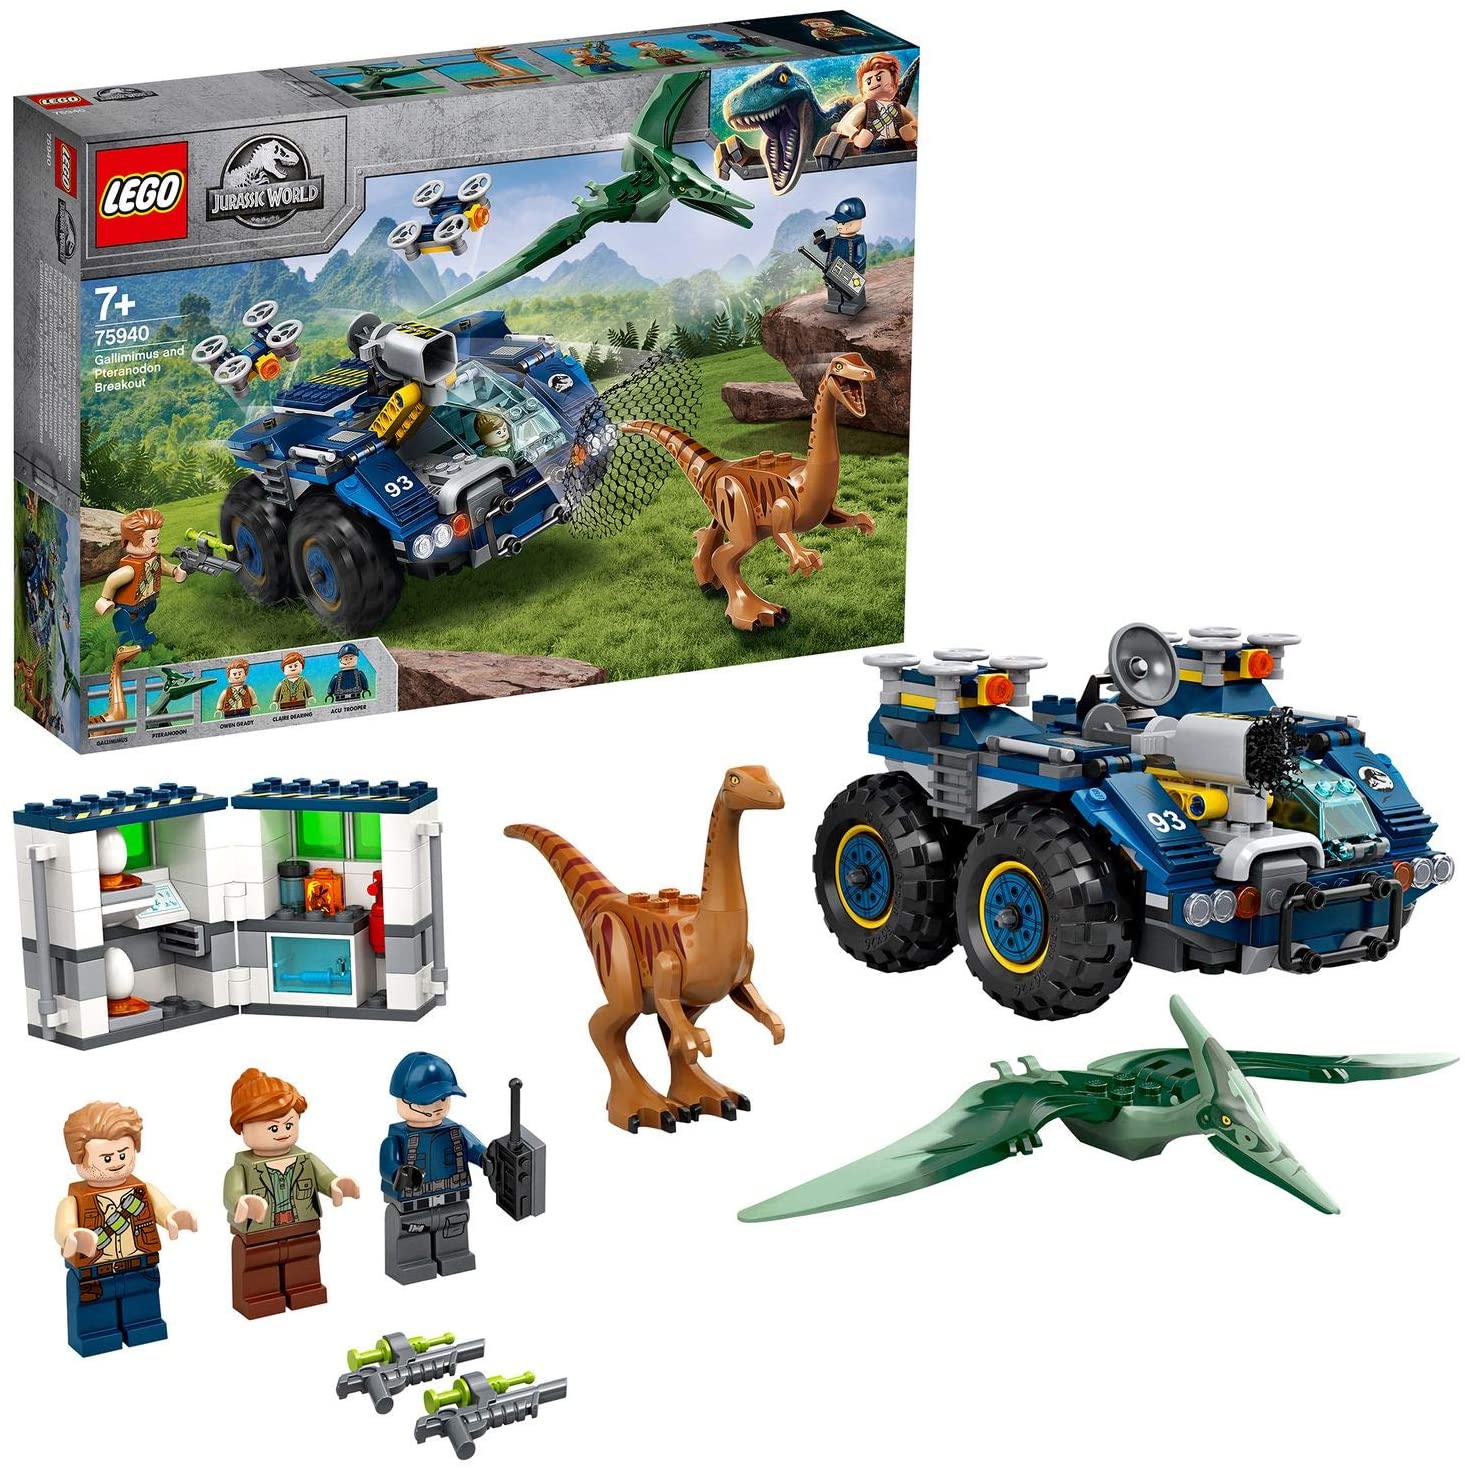 Lego 75940 Jurassic World Breakout Of Gallimimus And Pteranodon Dinosaur Fi